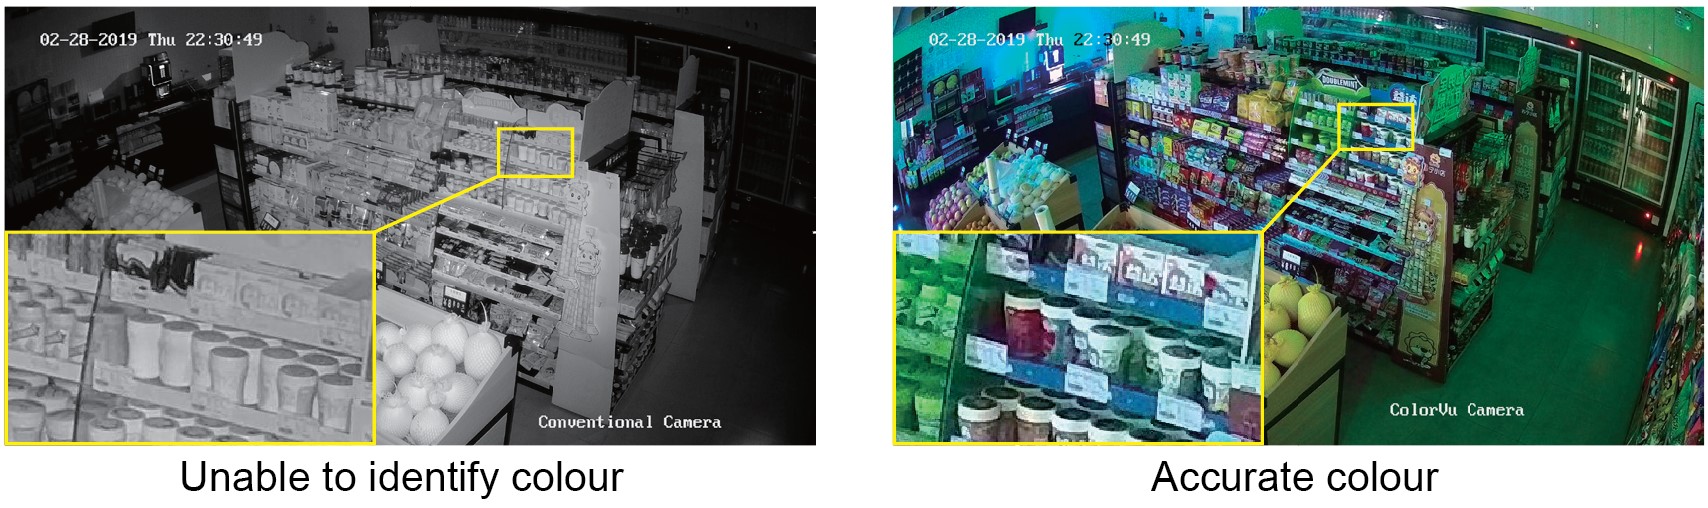 Hikvision CCTV ColorUV Camera Solution